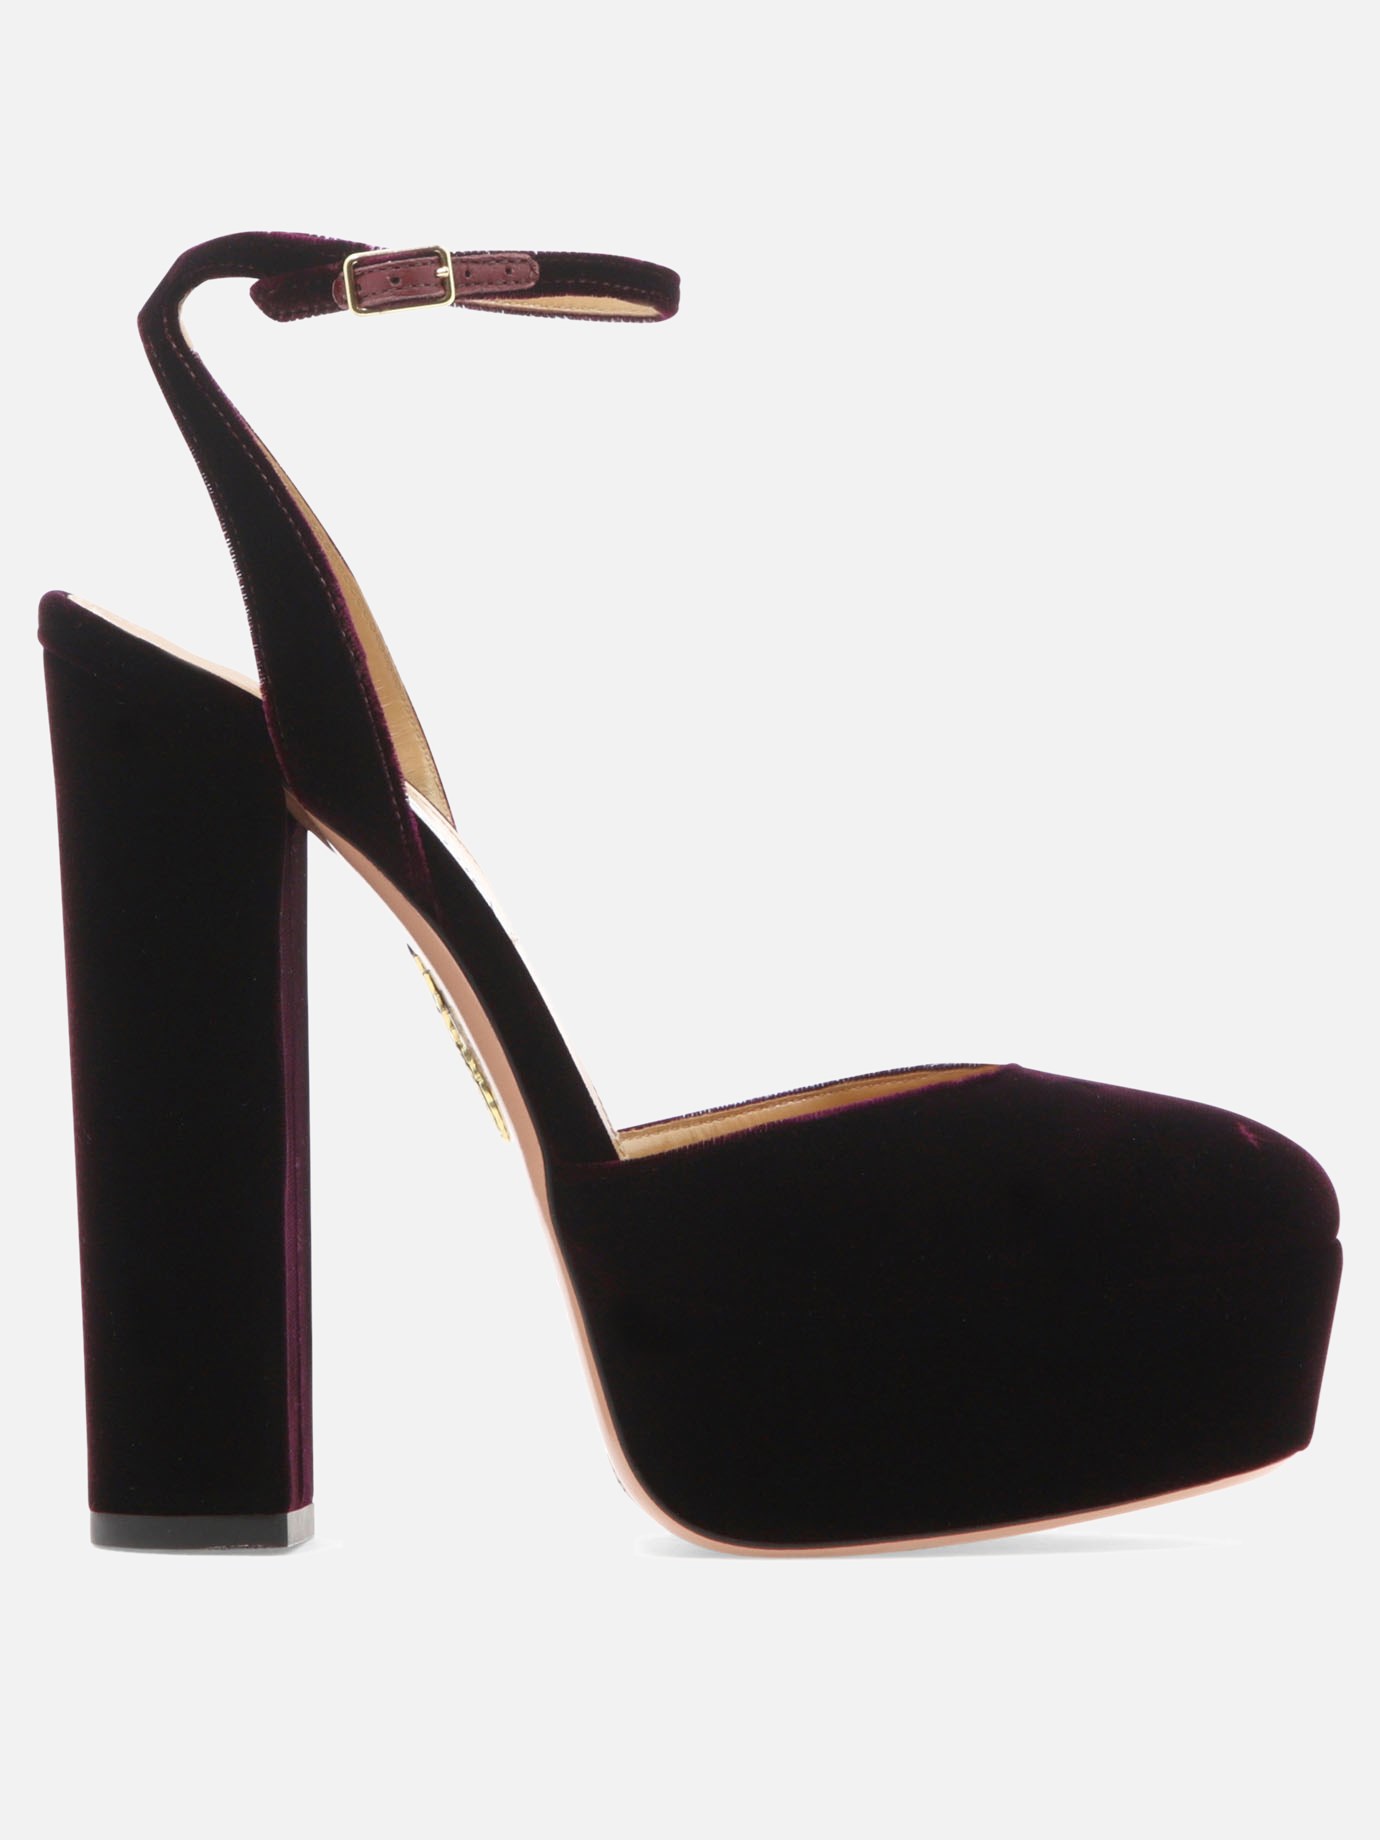  So High  heeled shoesby Aquazzura - 5